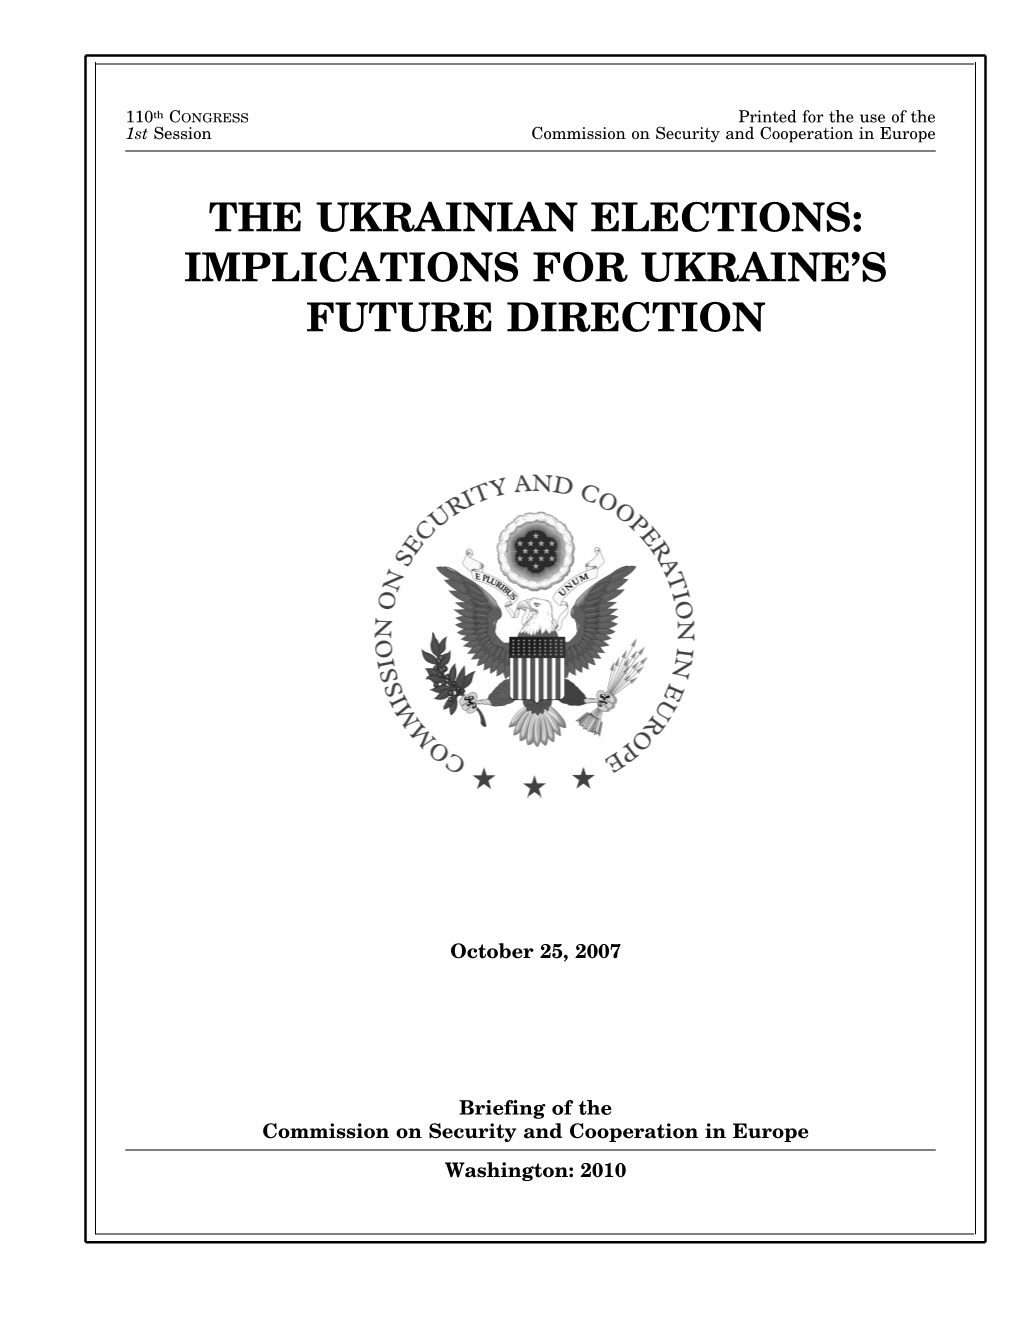 The Ukrainian Elections: Implications for Ukraine's